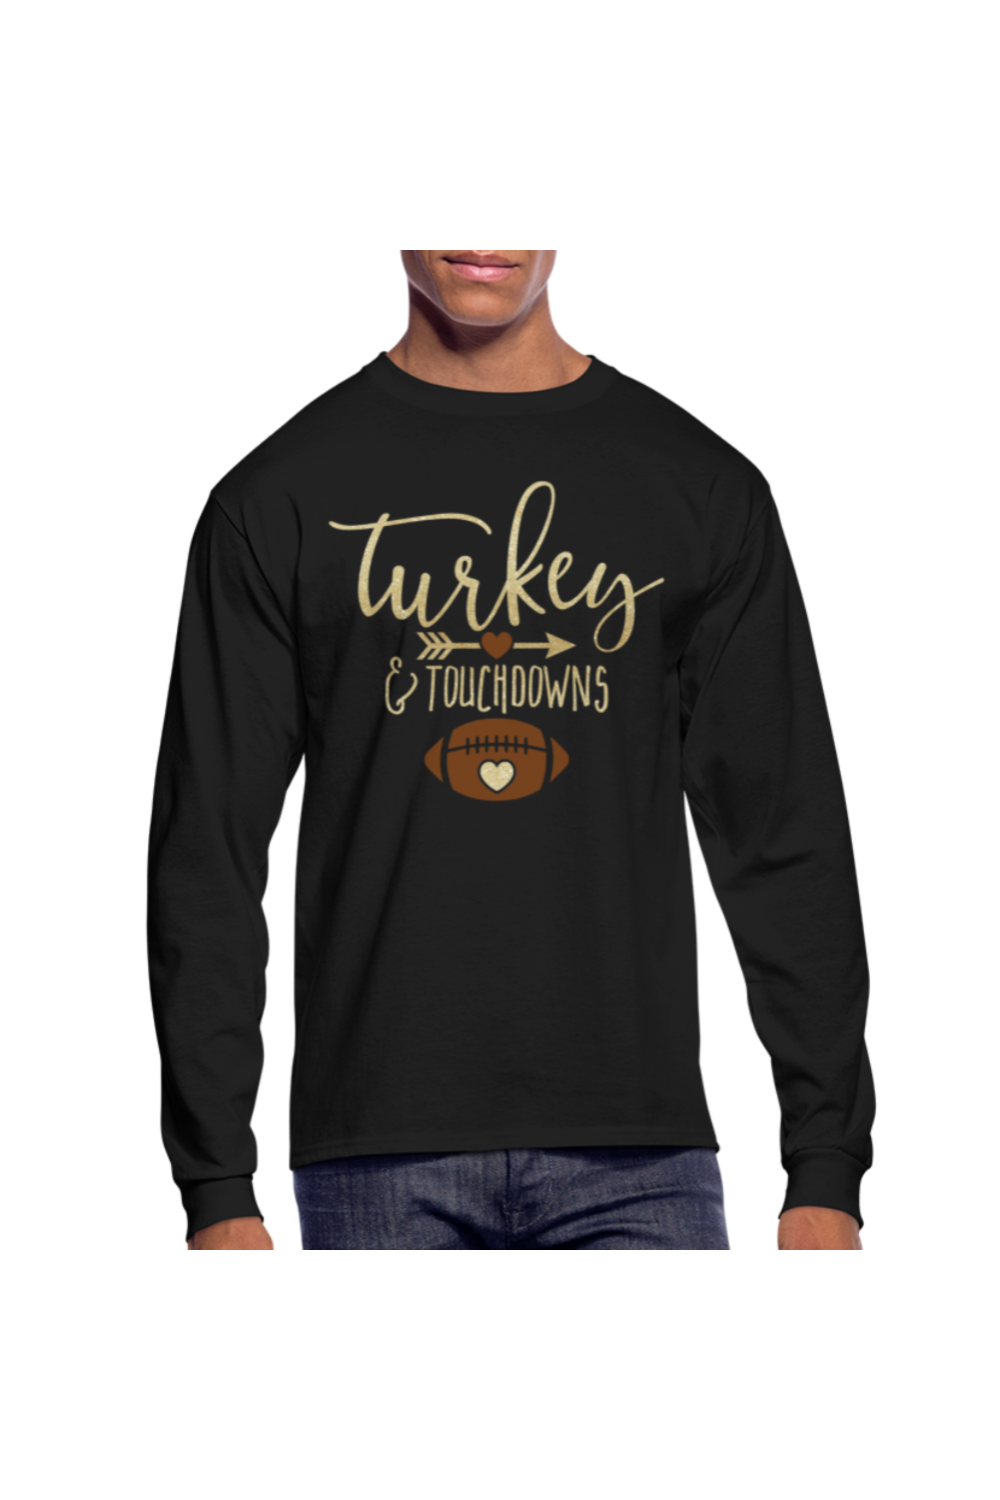 Men Thanksgiving T-Shirt Turkey and Touchdowns Long Sleeve - black - NicholesGifts.online